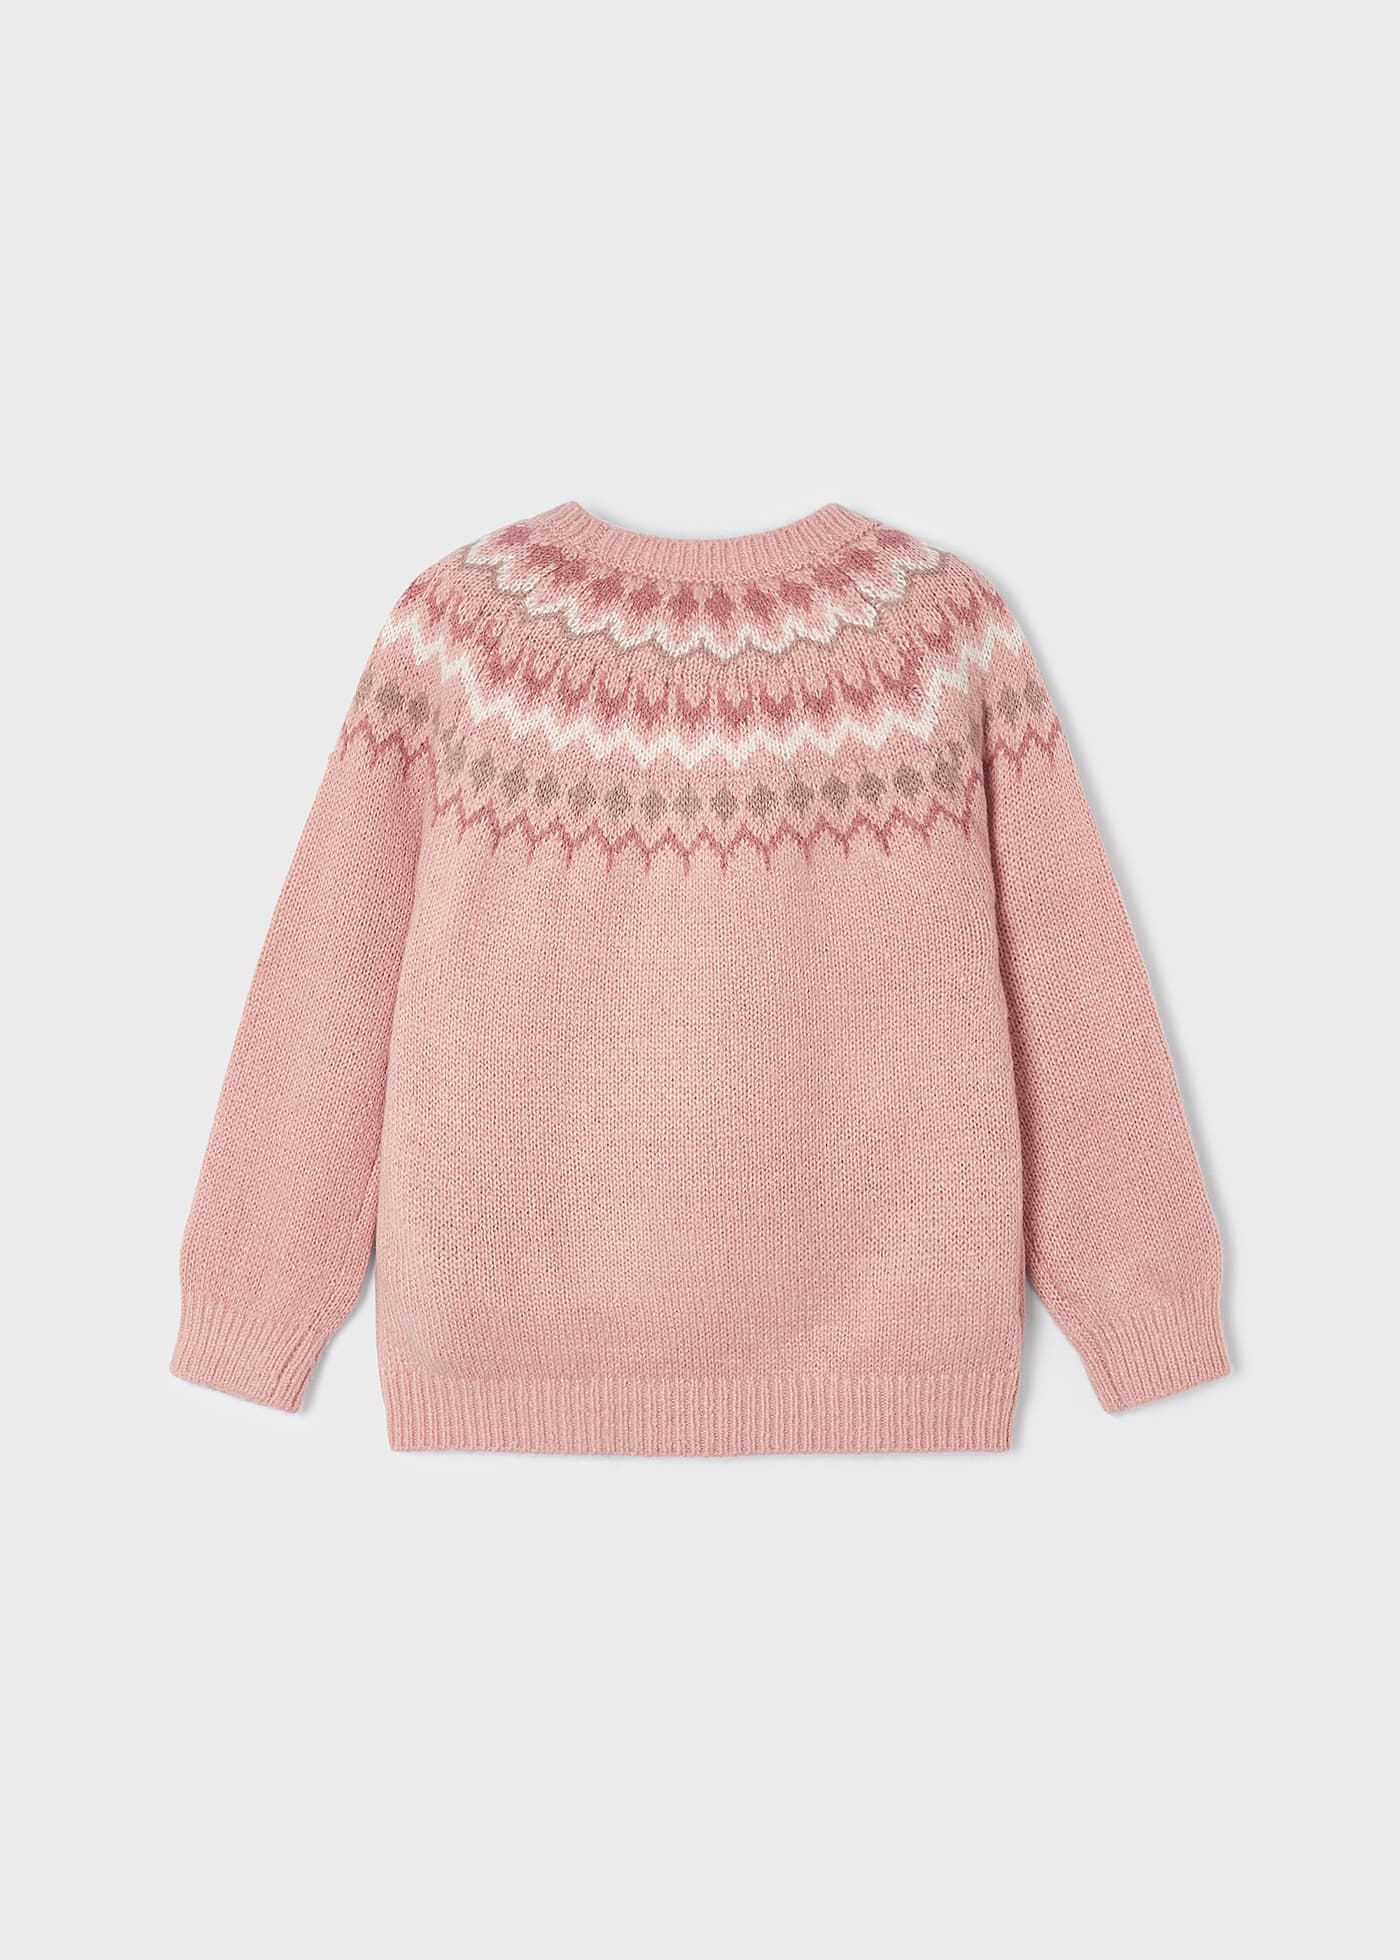 jacquard knit pullover